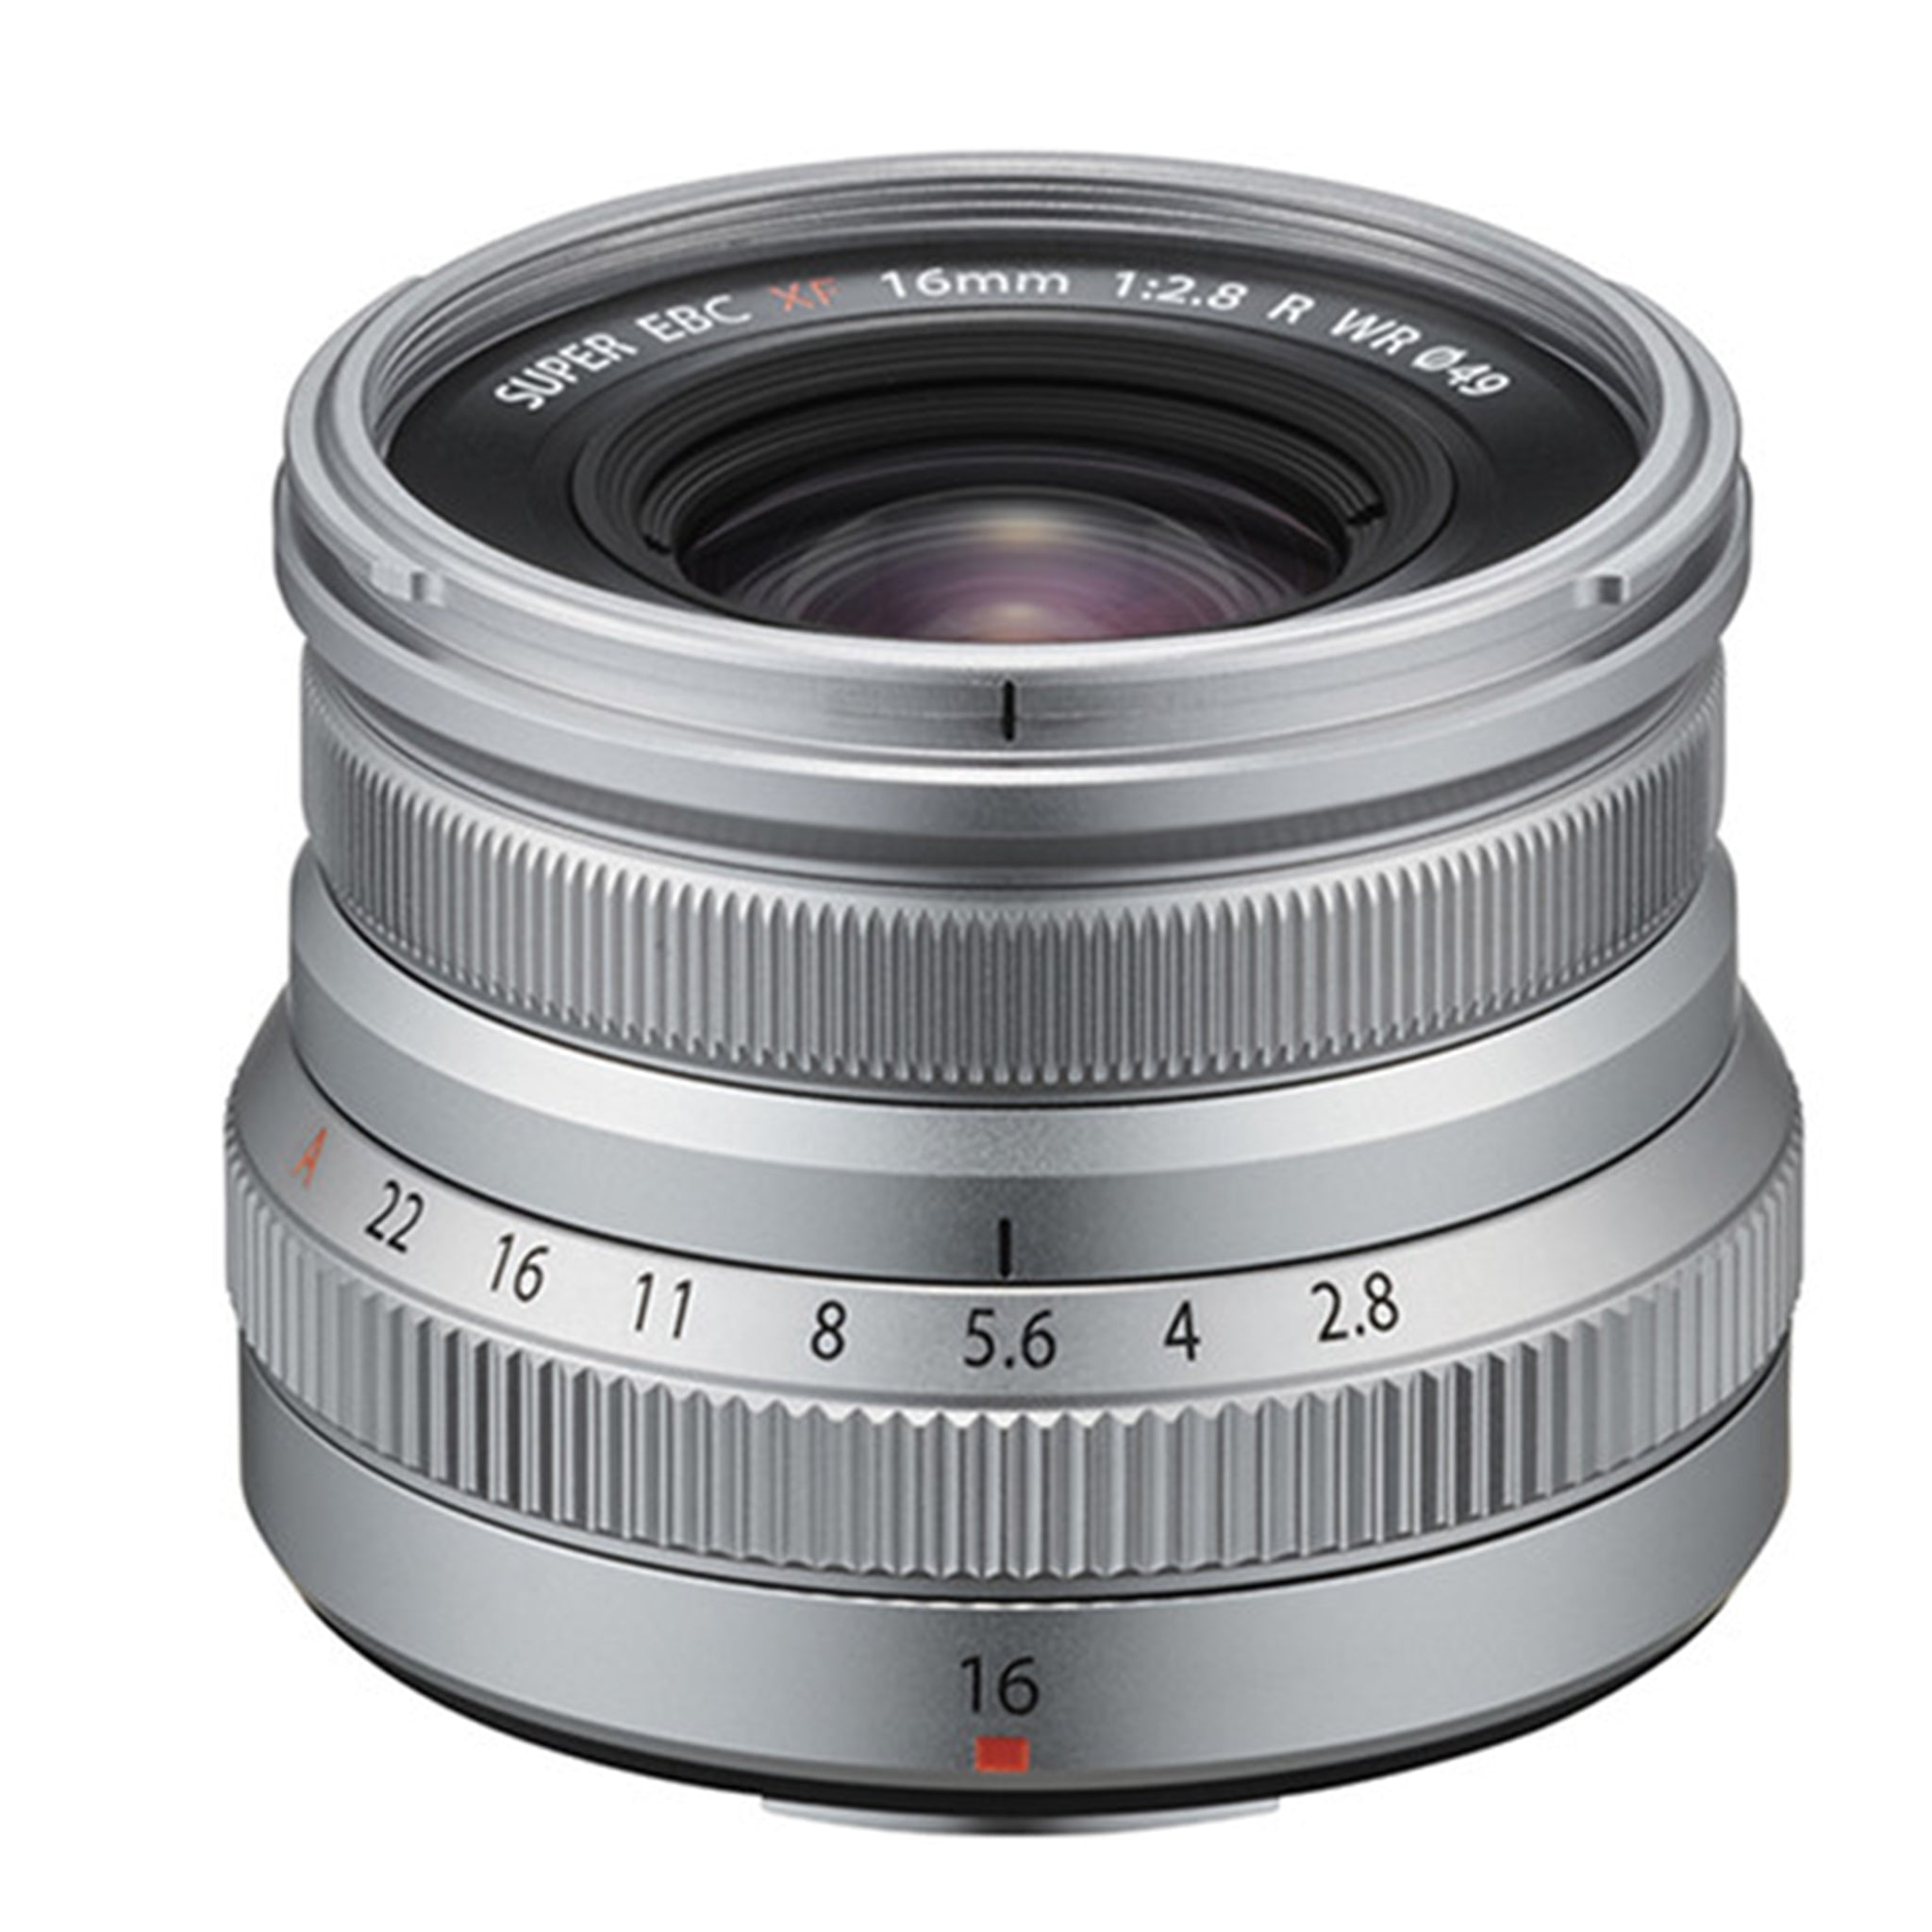 Fujifilm XF 16mm F2.8 WR Lens